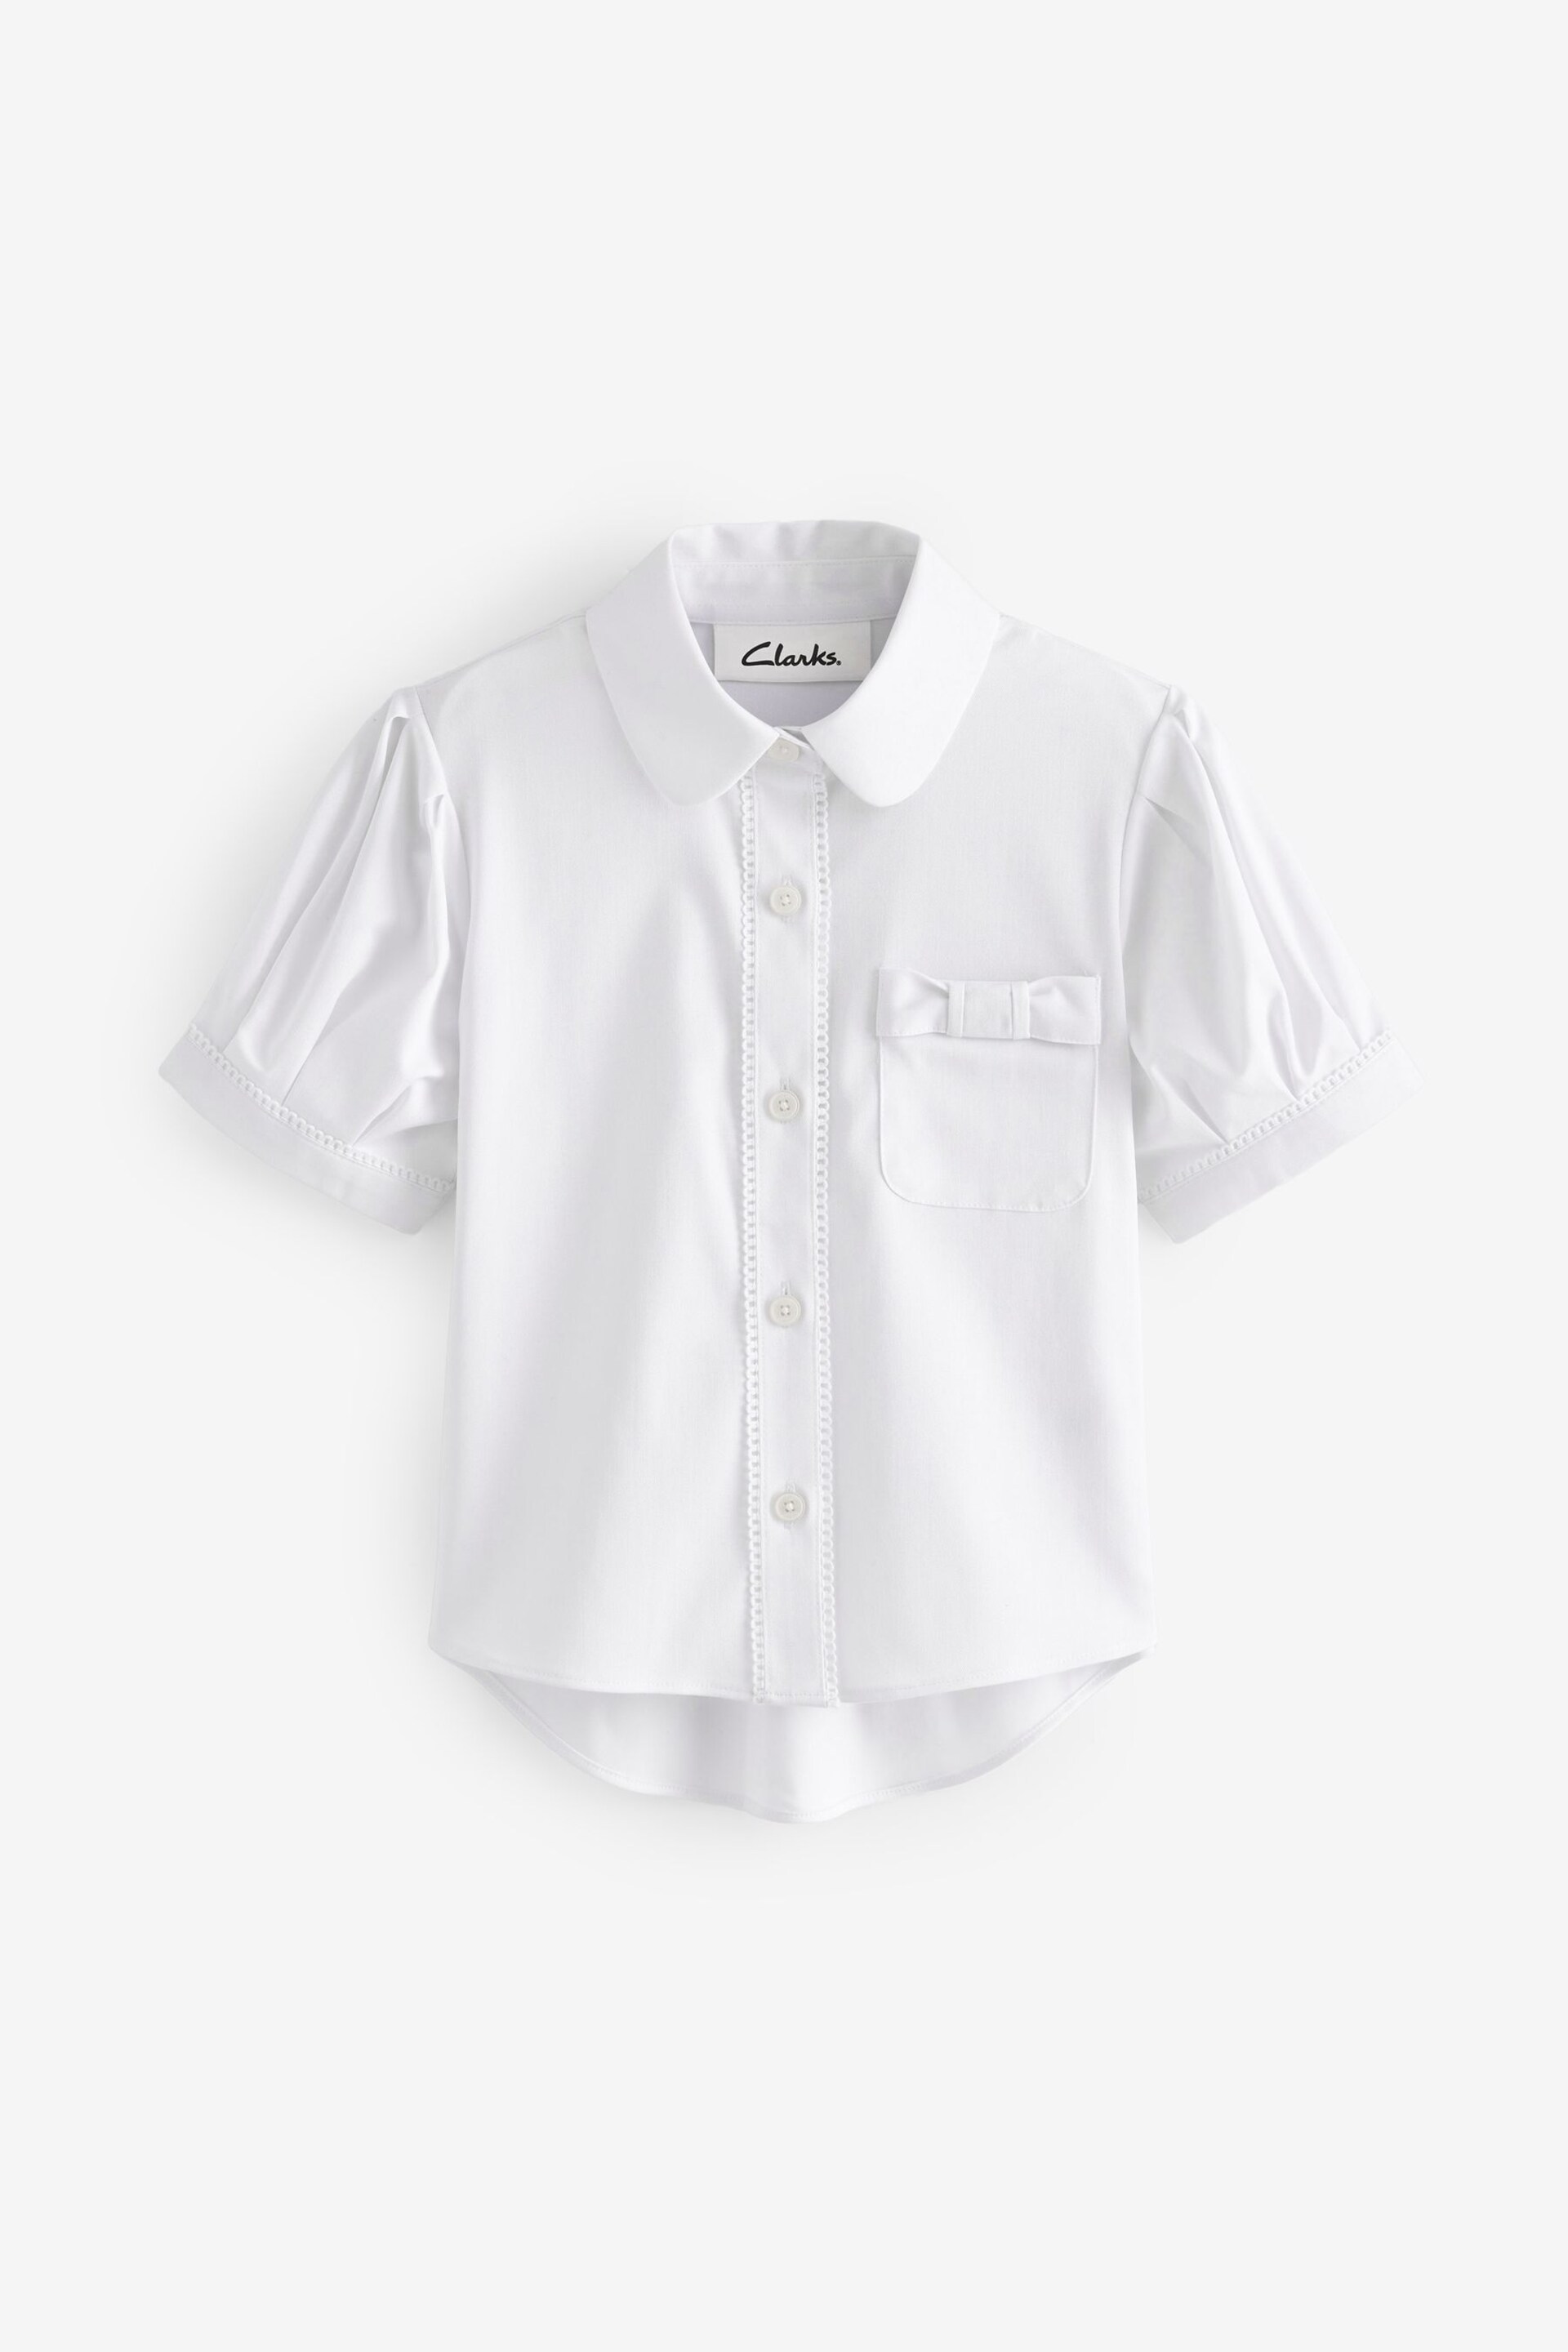 Clarks White Short Sleeve Girls Lace Trim School Shirt - Image 8 of 11